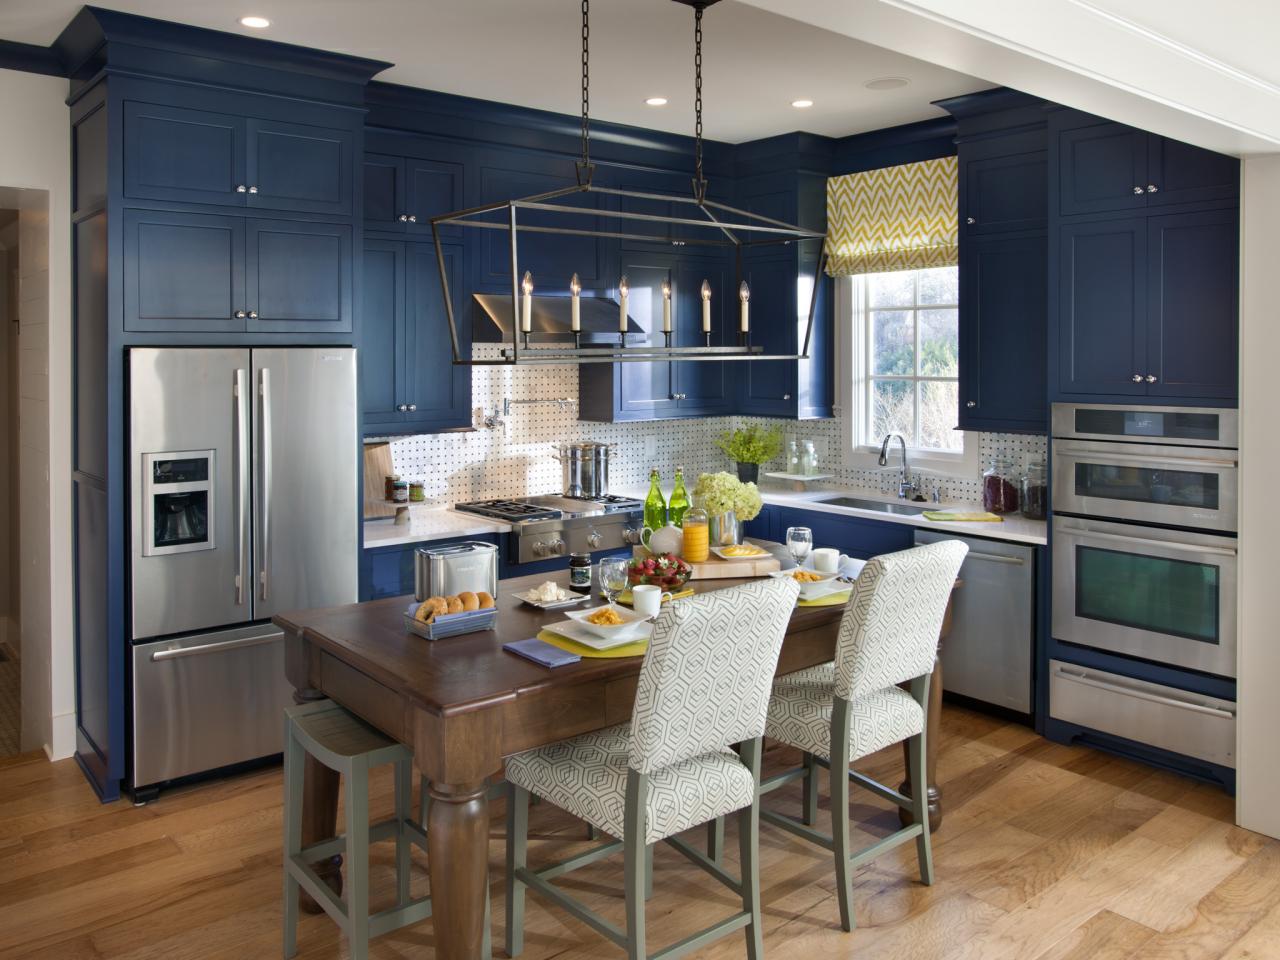 9 Kitchen Color Ideas That Aren't White | HGTV's Decorating & Design